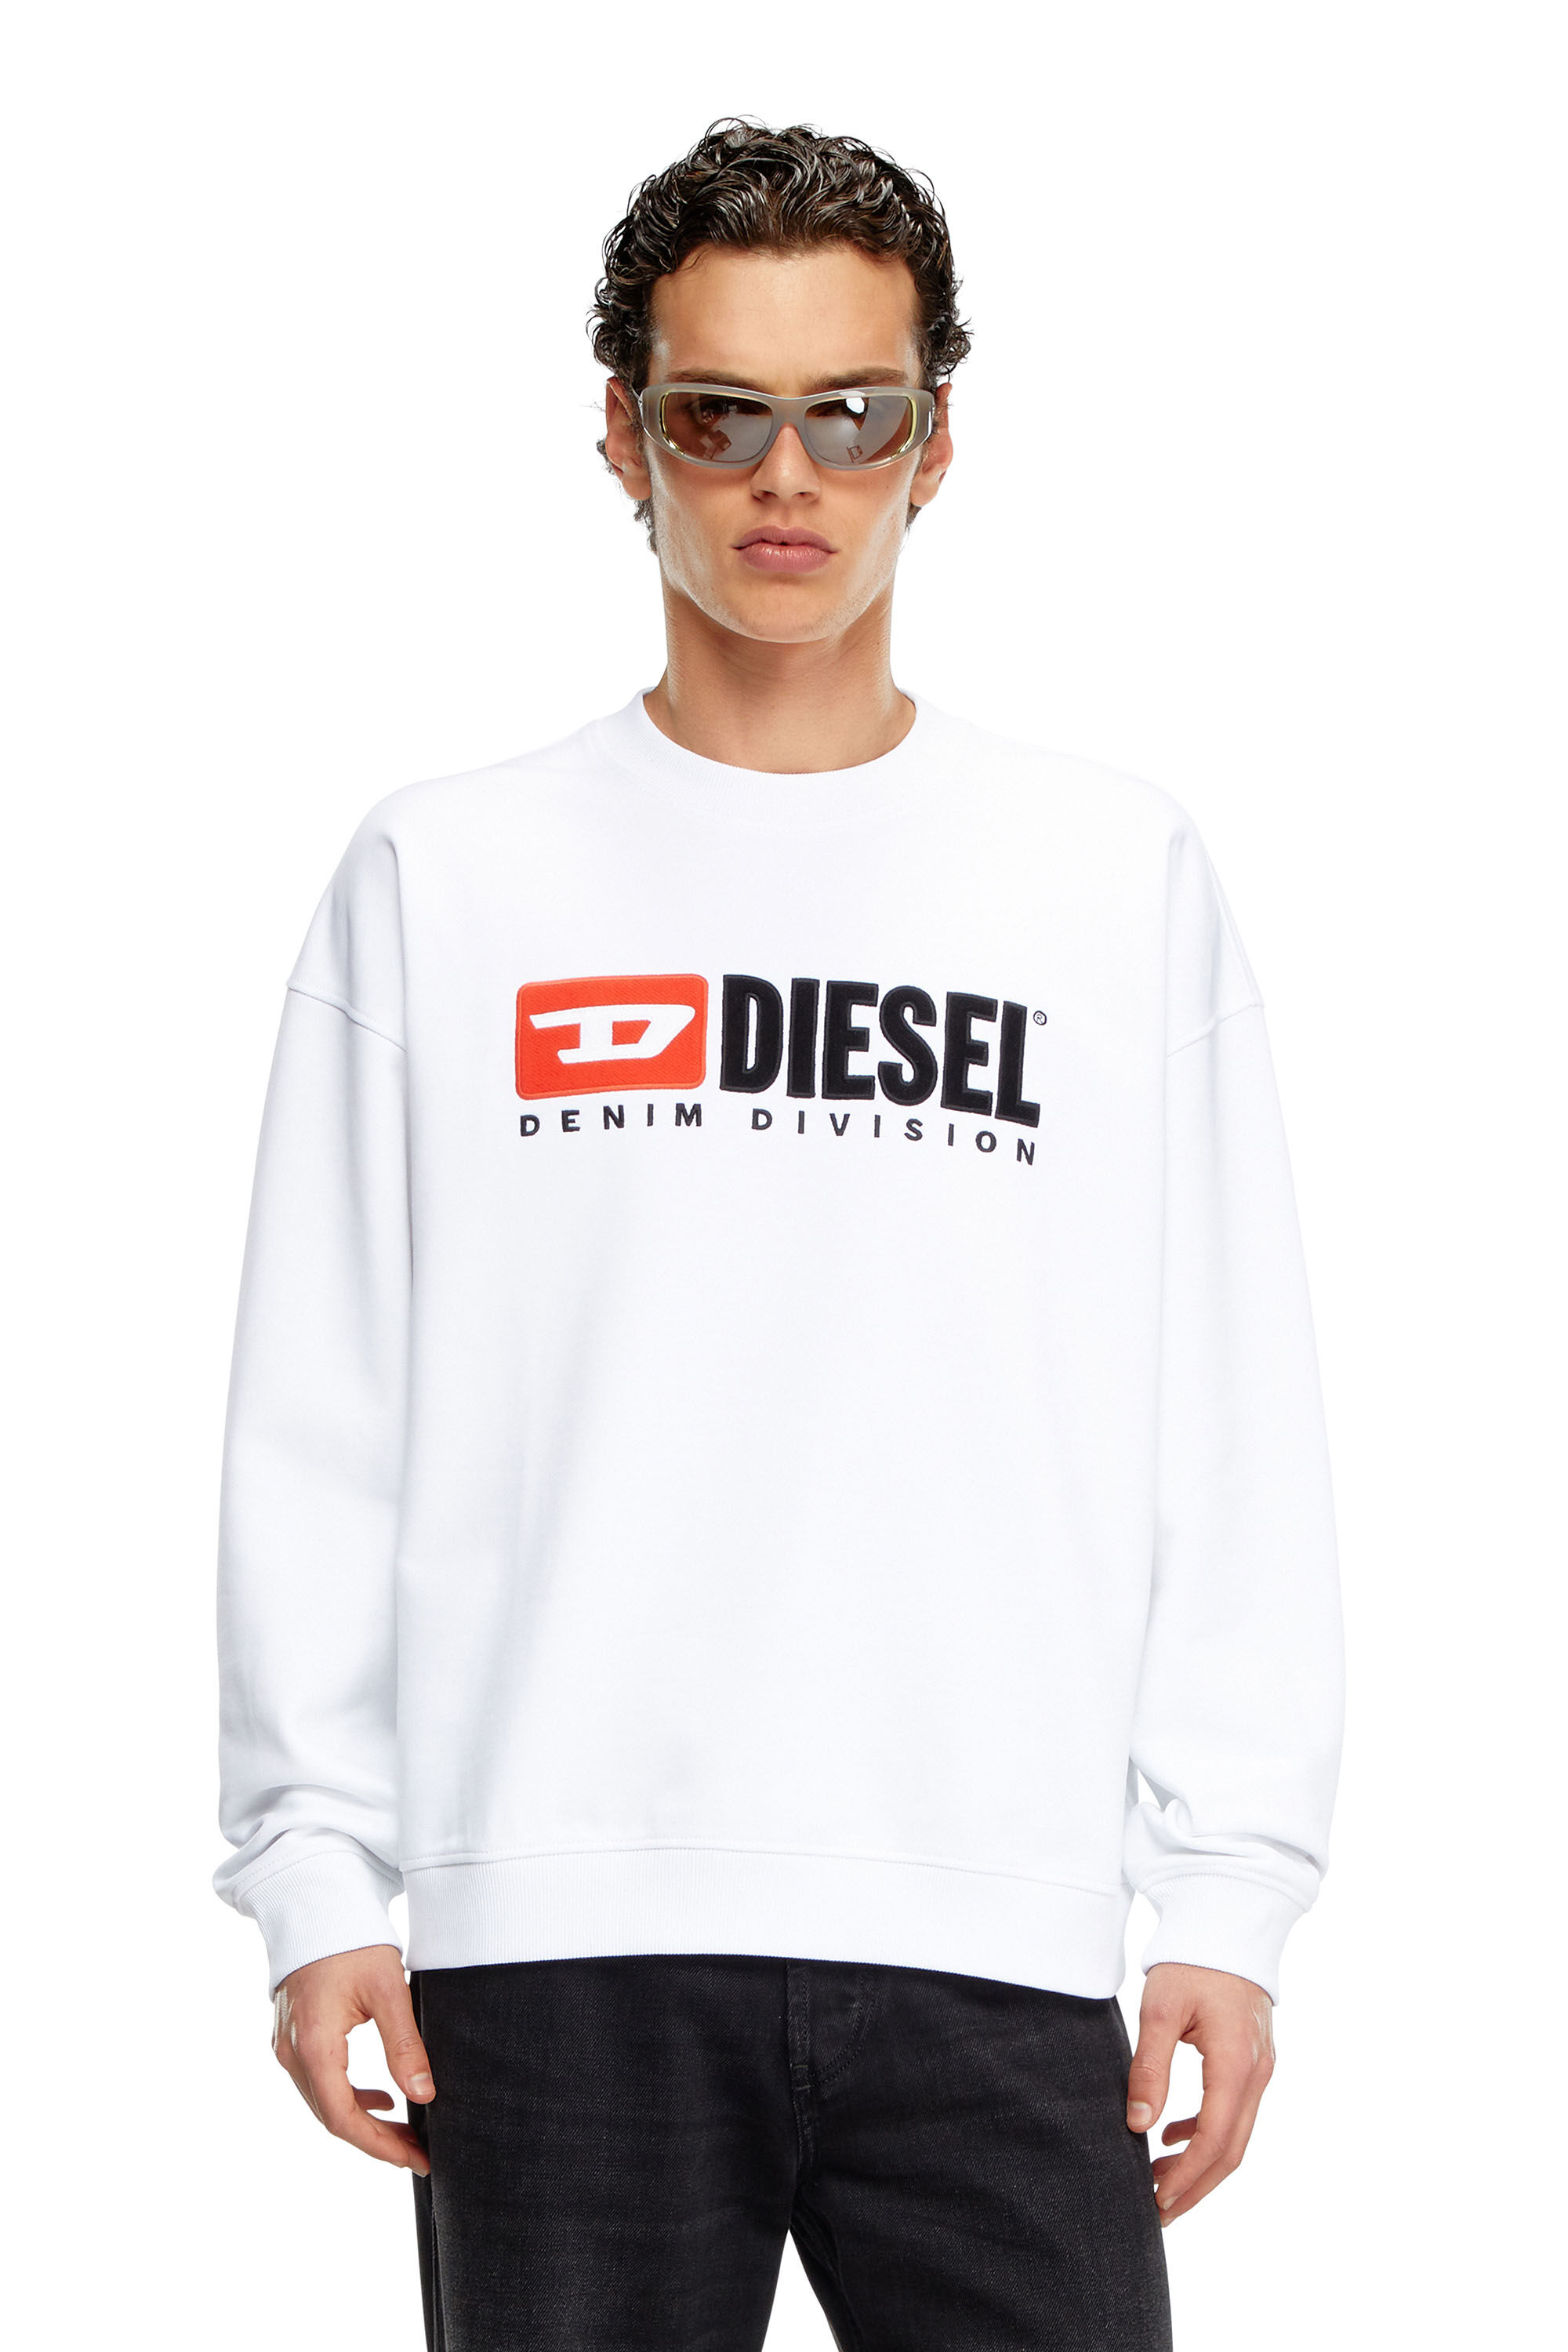 Diesel - S-BOXT-DIV, Man Sweatshirt with Denim Division logo in White - Image 3